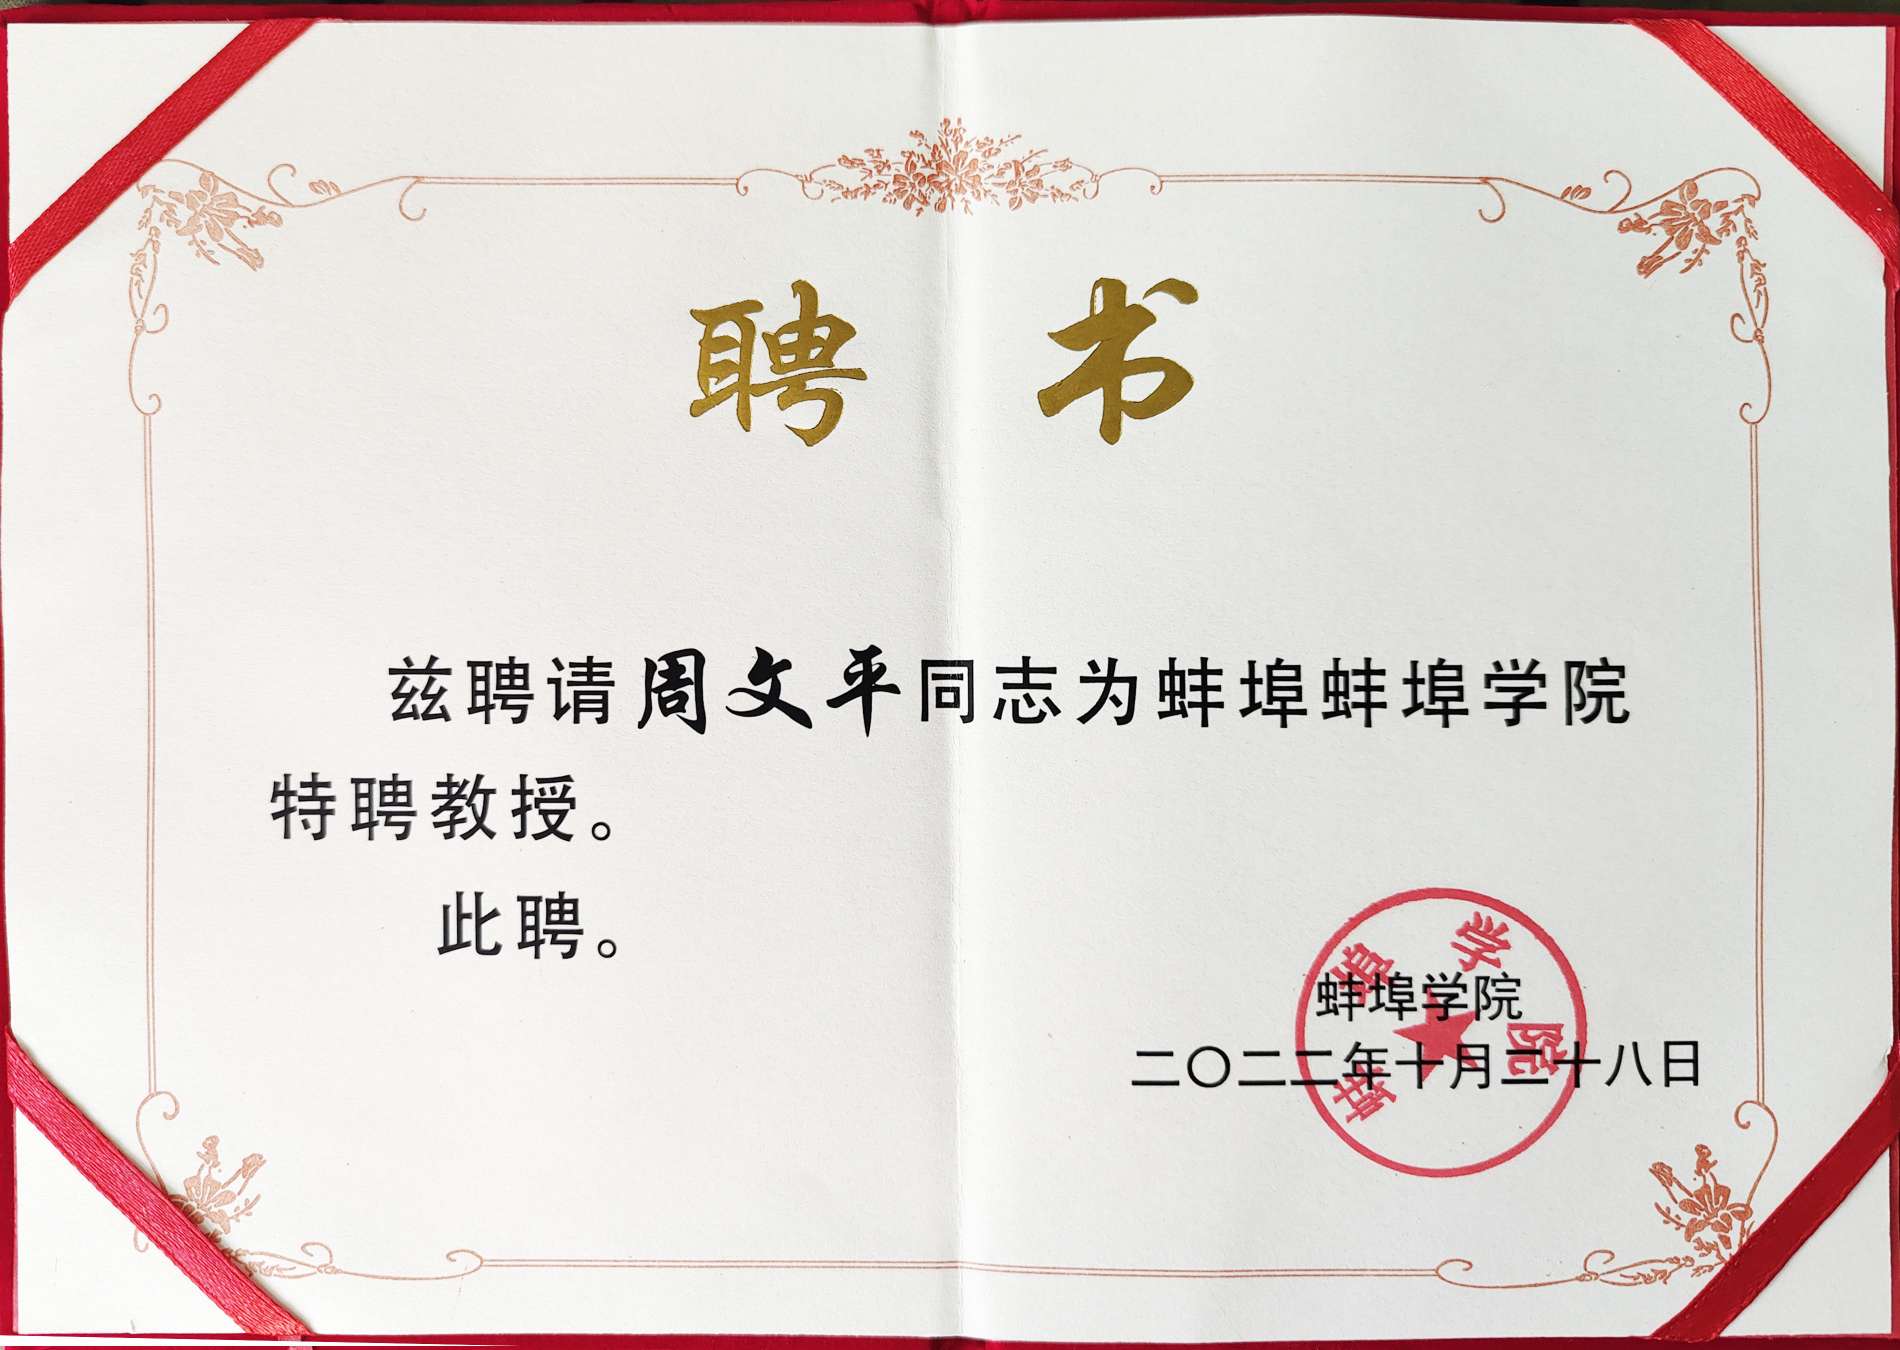 Bengbu College awarded Long Hua Zhou Wenping "Distinguished Professor" honorary certificate!